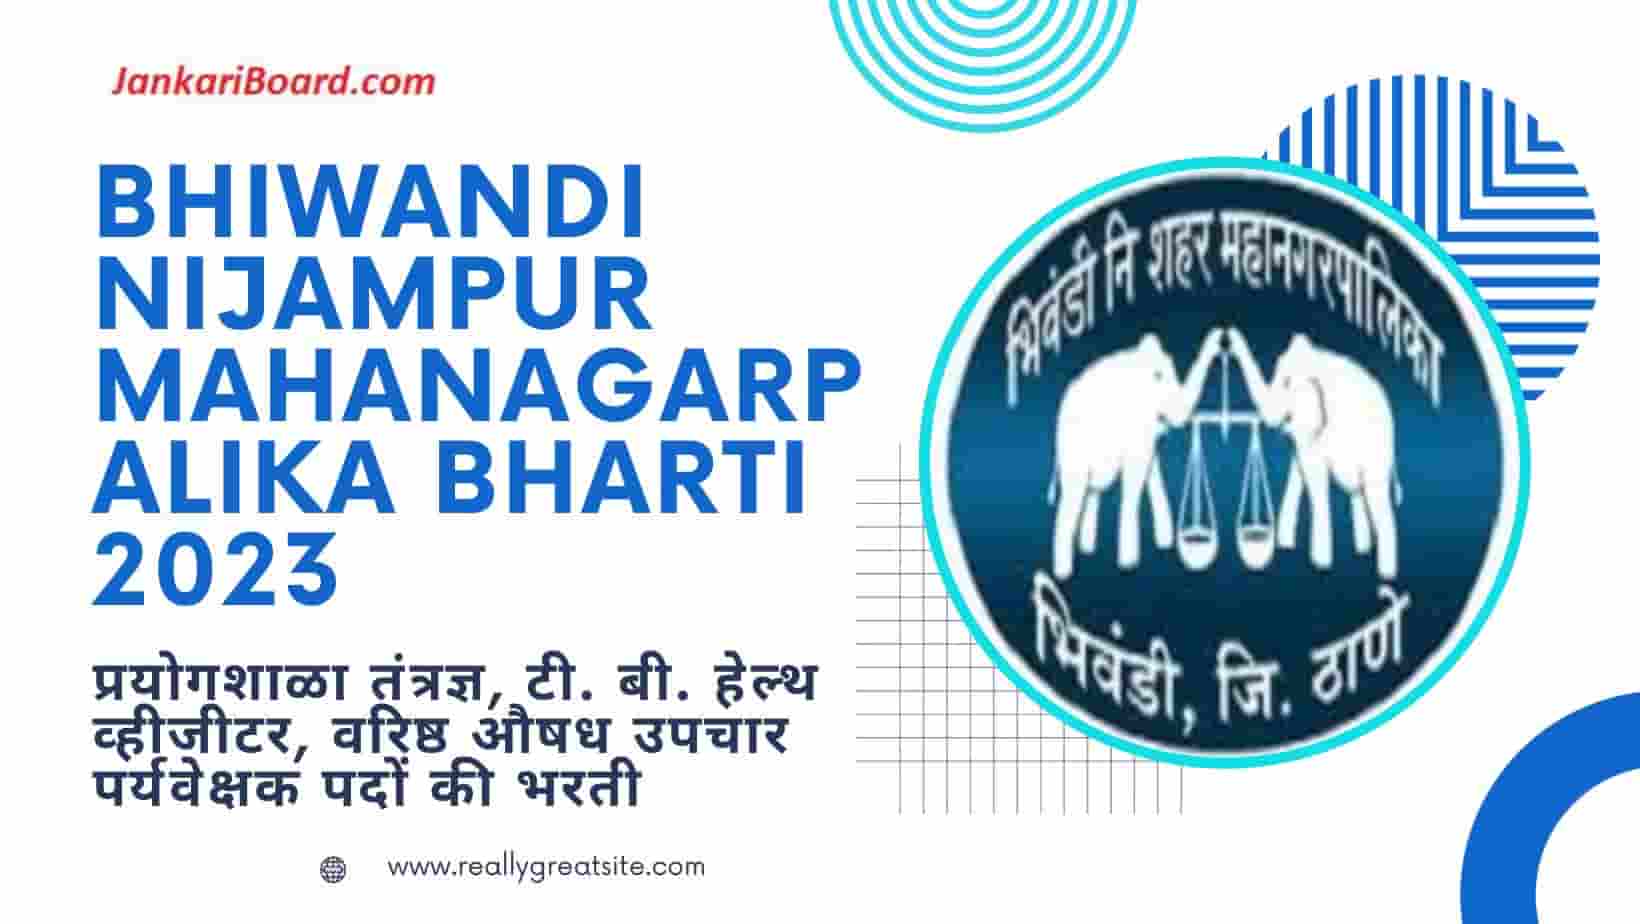 Bhiwandi Nijampur Mahanagarpalika Bharti 2023